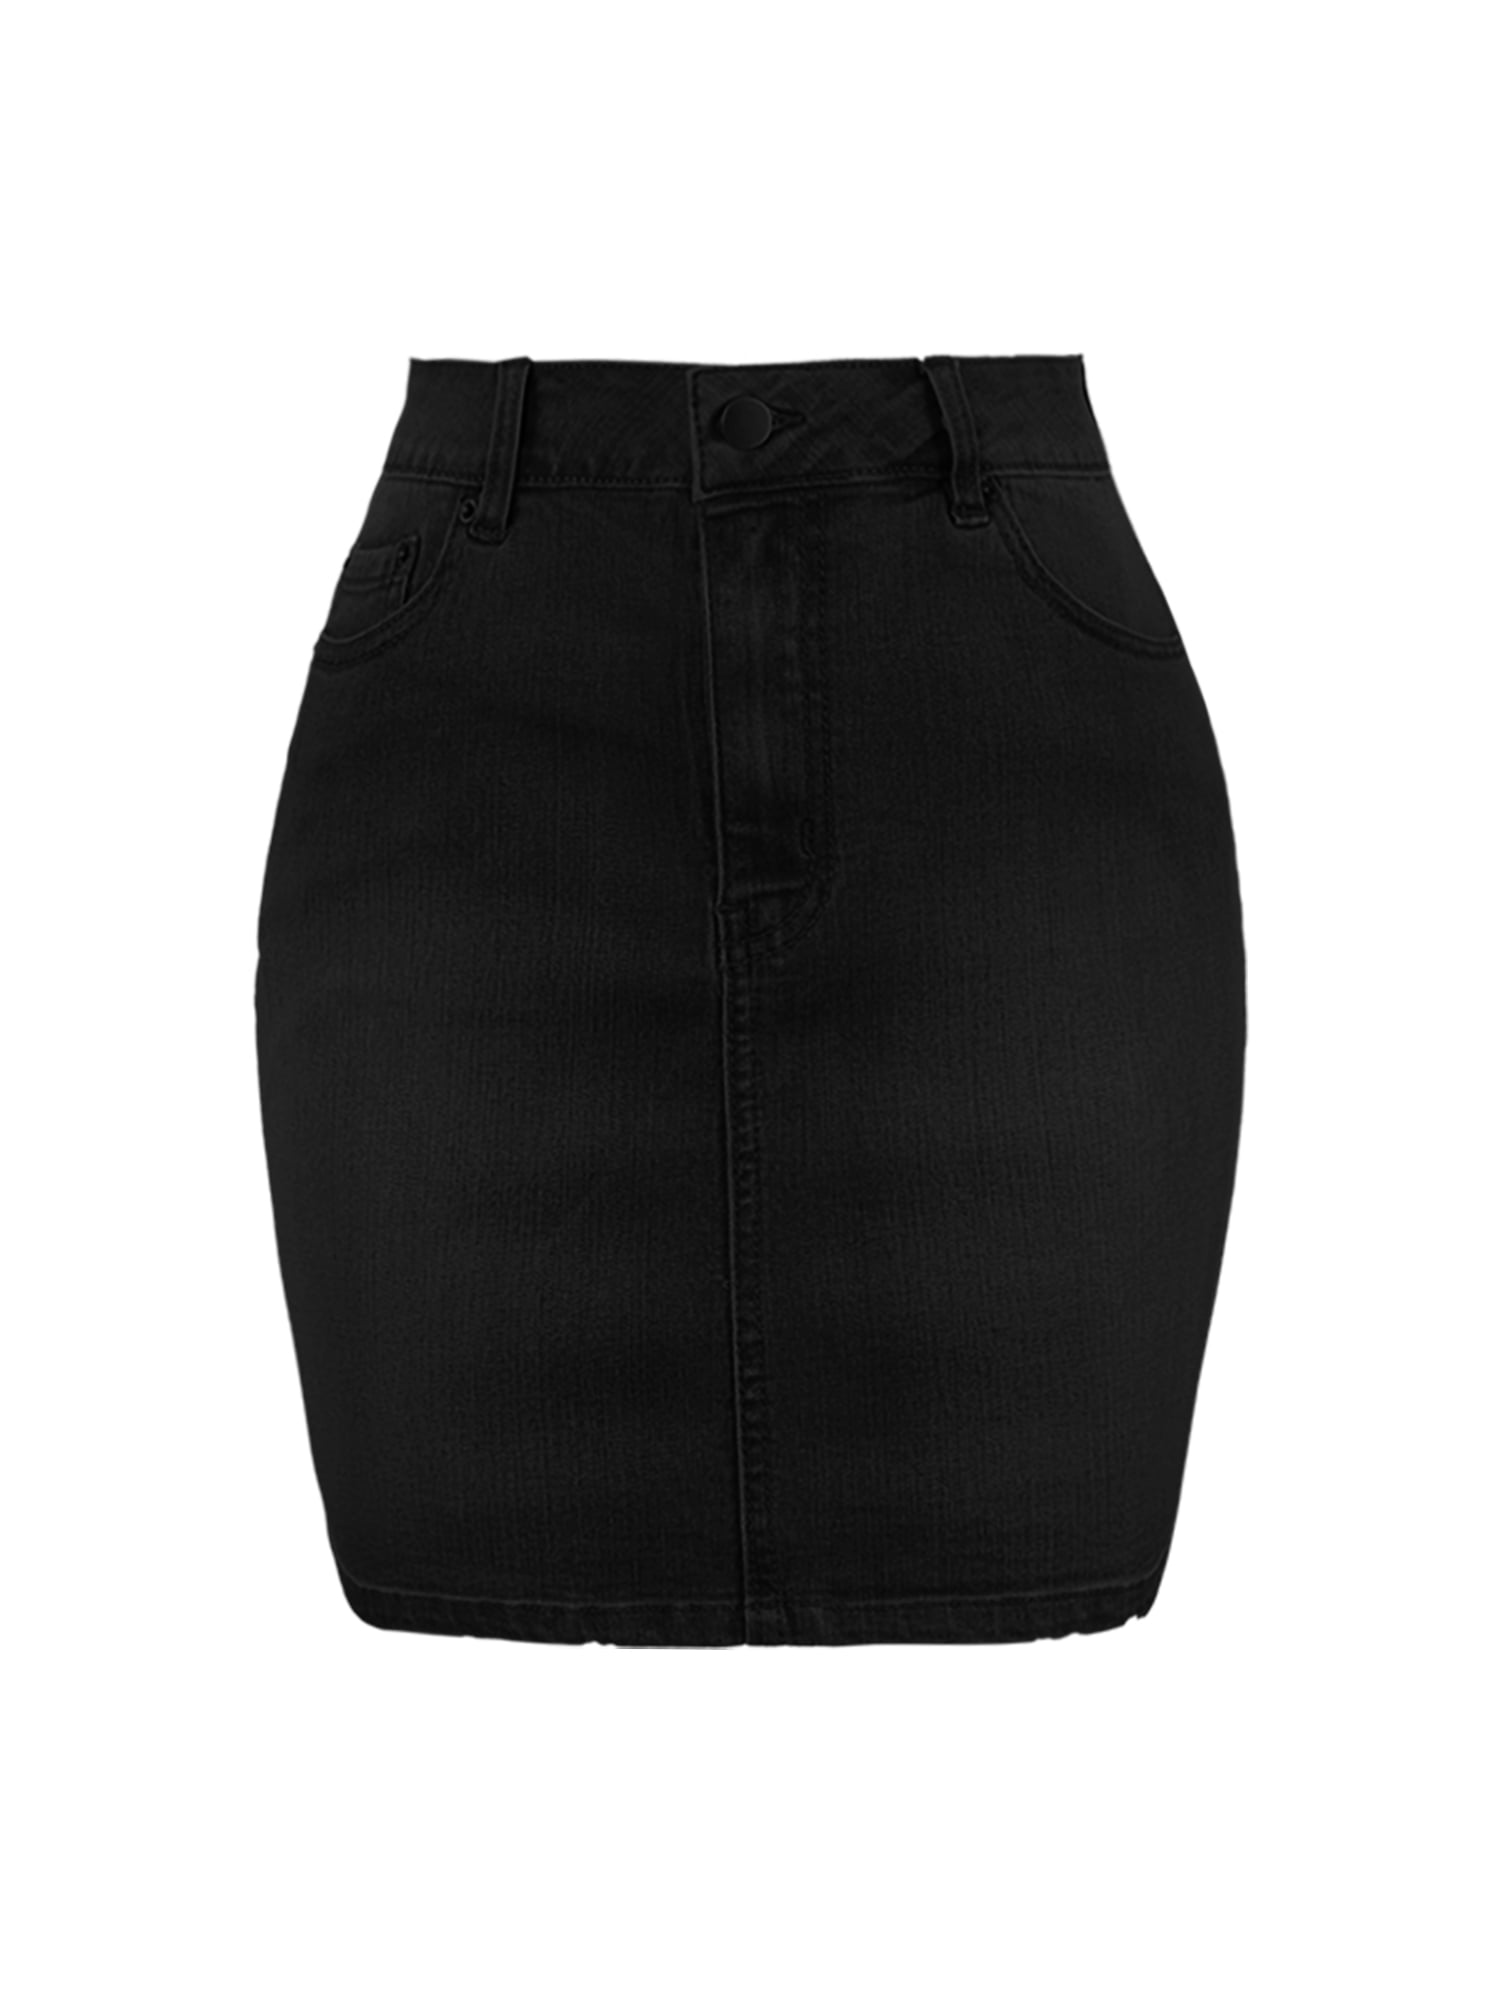 A2Y Women's Casual Rayon Denim Jean Short Mini Skirts Black S - Walmart.com